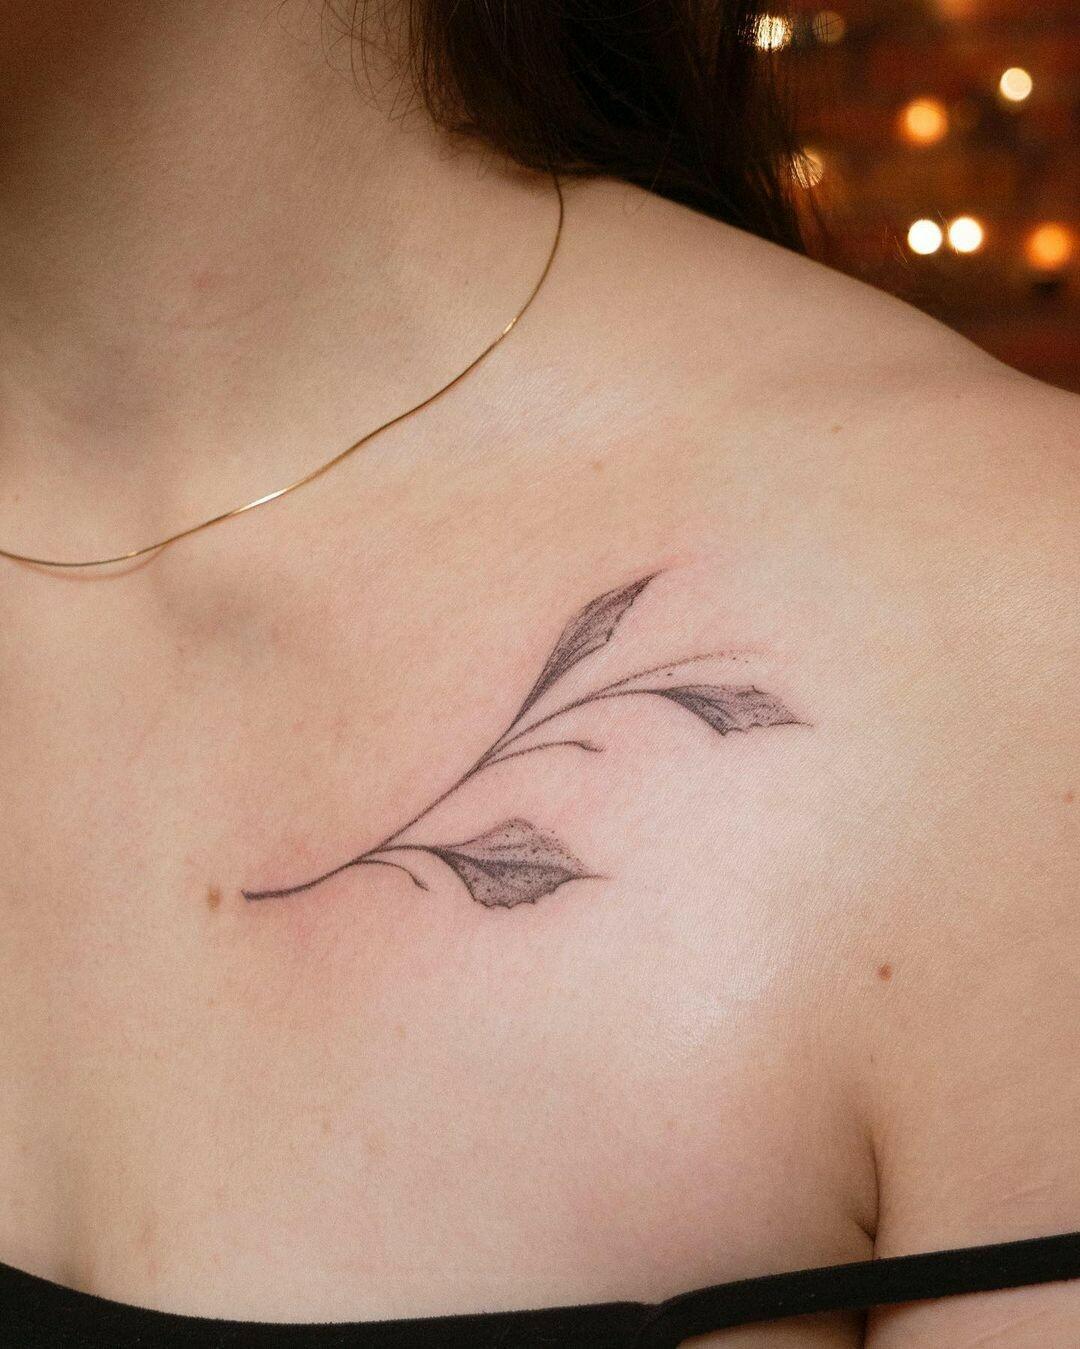 Inksearch tattoo Ula Mierzwa